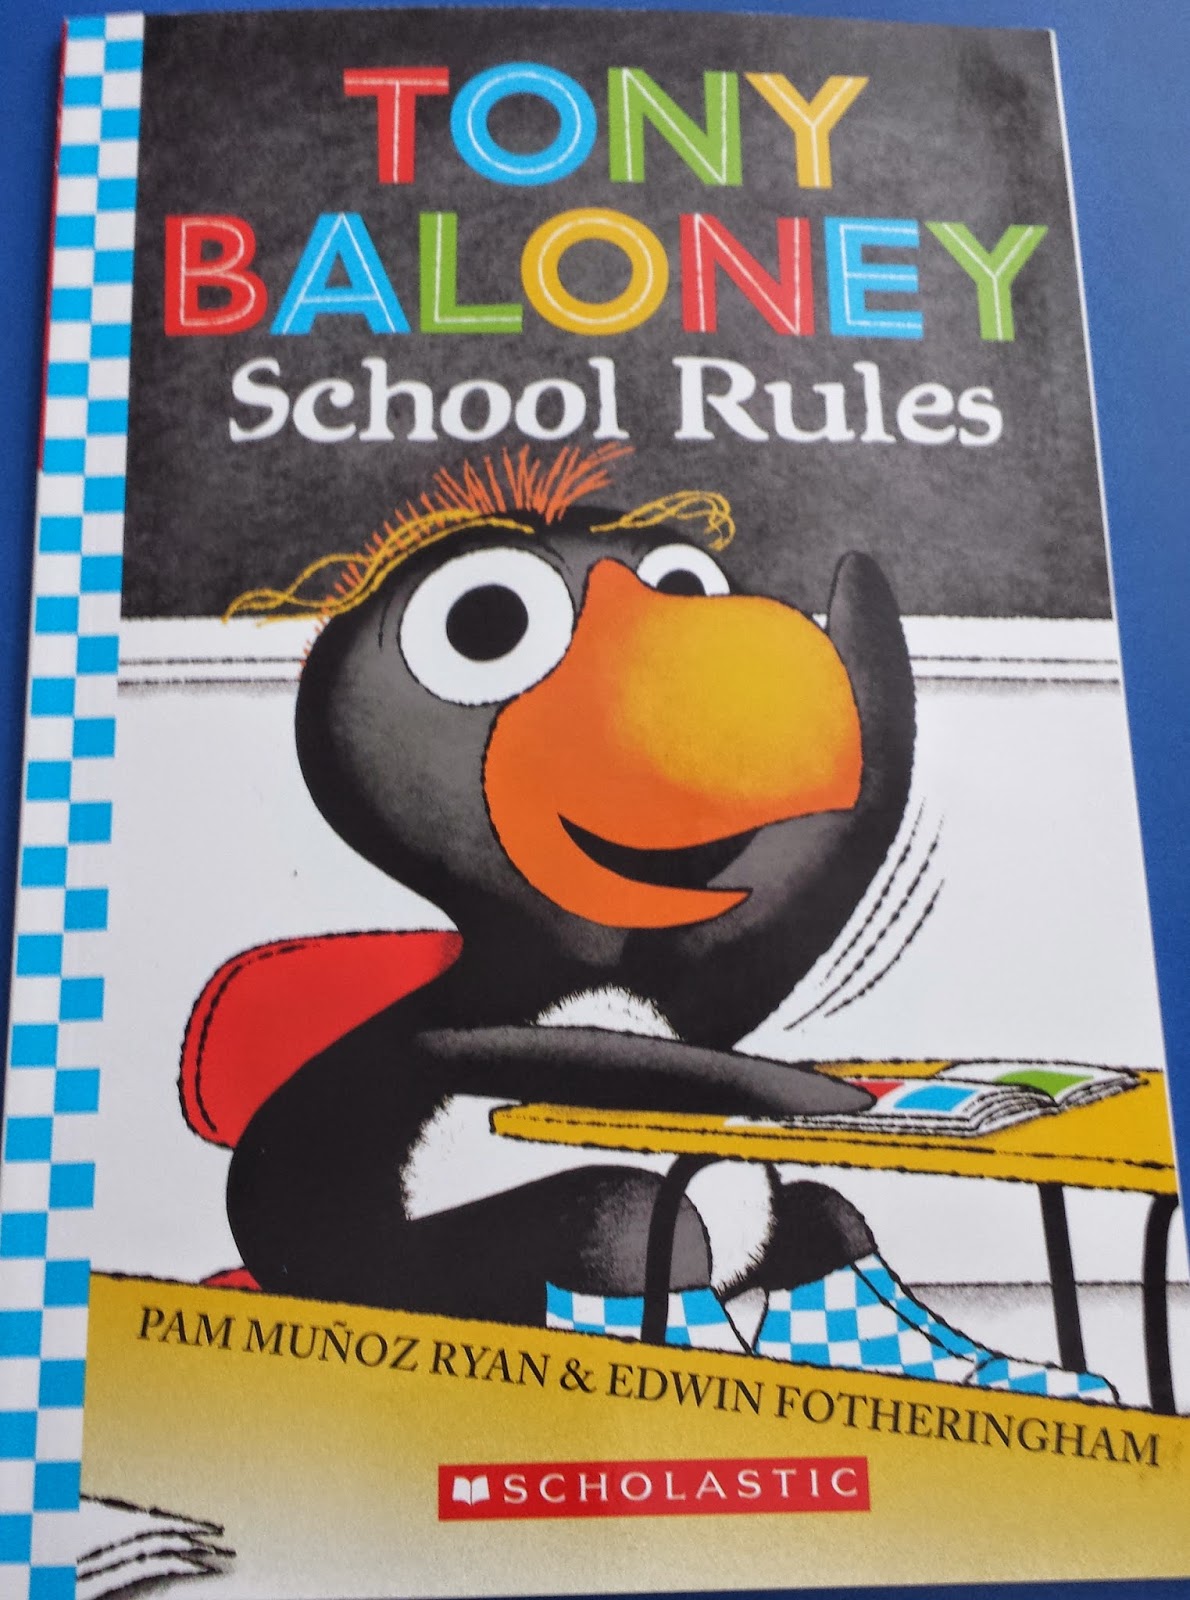 http://www.amazon.com/Tony-Baloney-School-Rules-Munoz/dp/054548166X/ref=sr_1_1?s=books&ie=UTF8&qid=1402415401&sr=1-1&keywords=tony+baloney